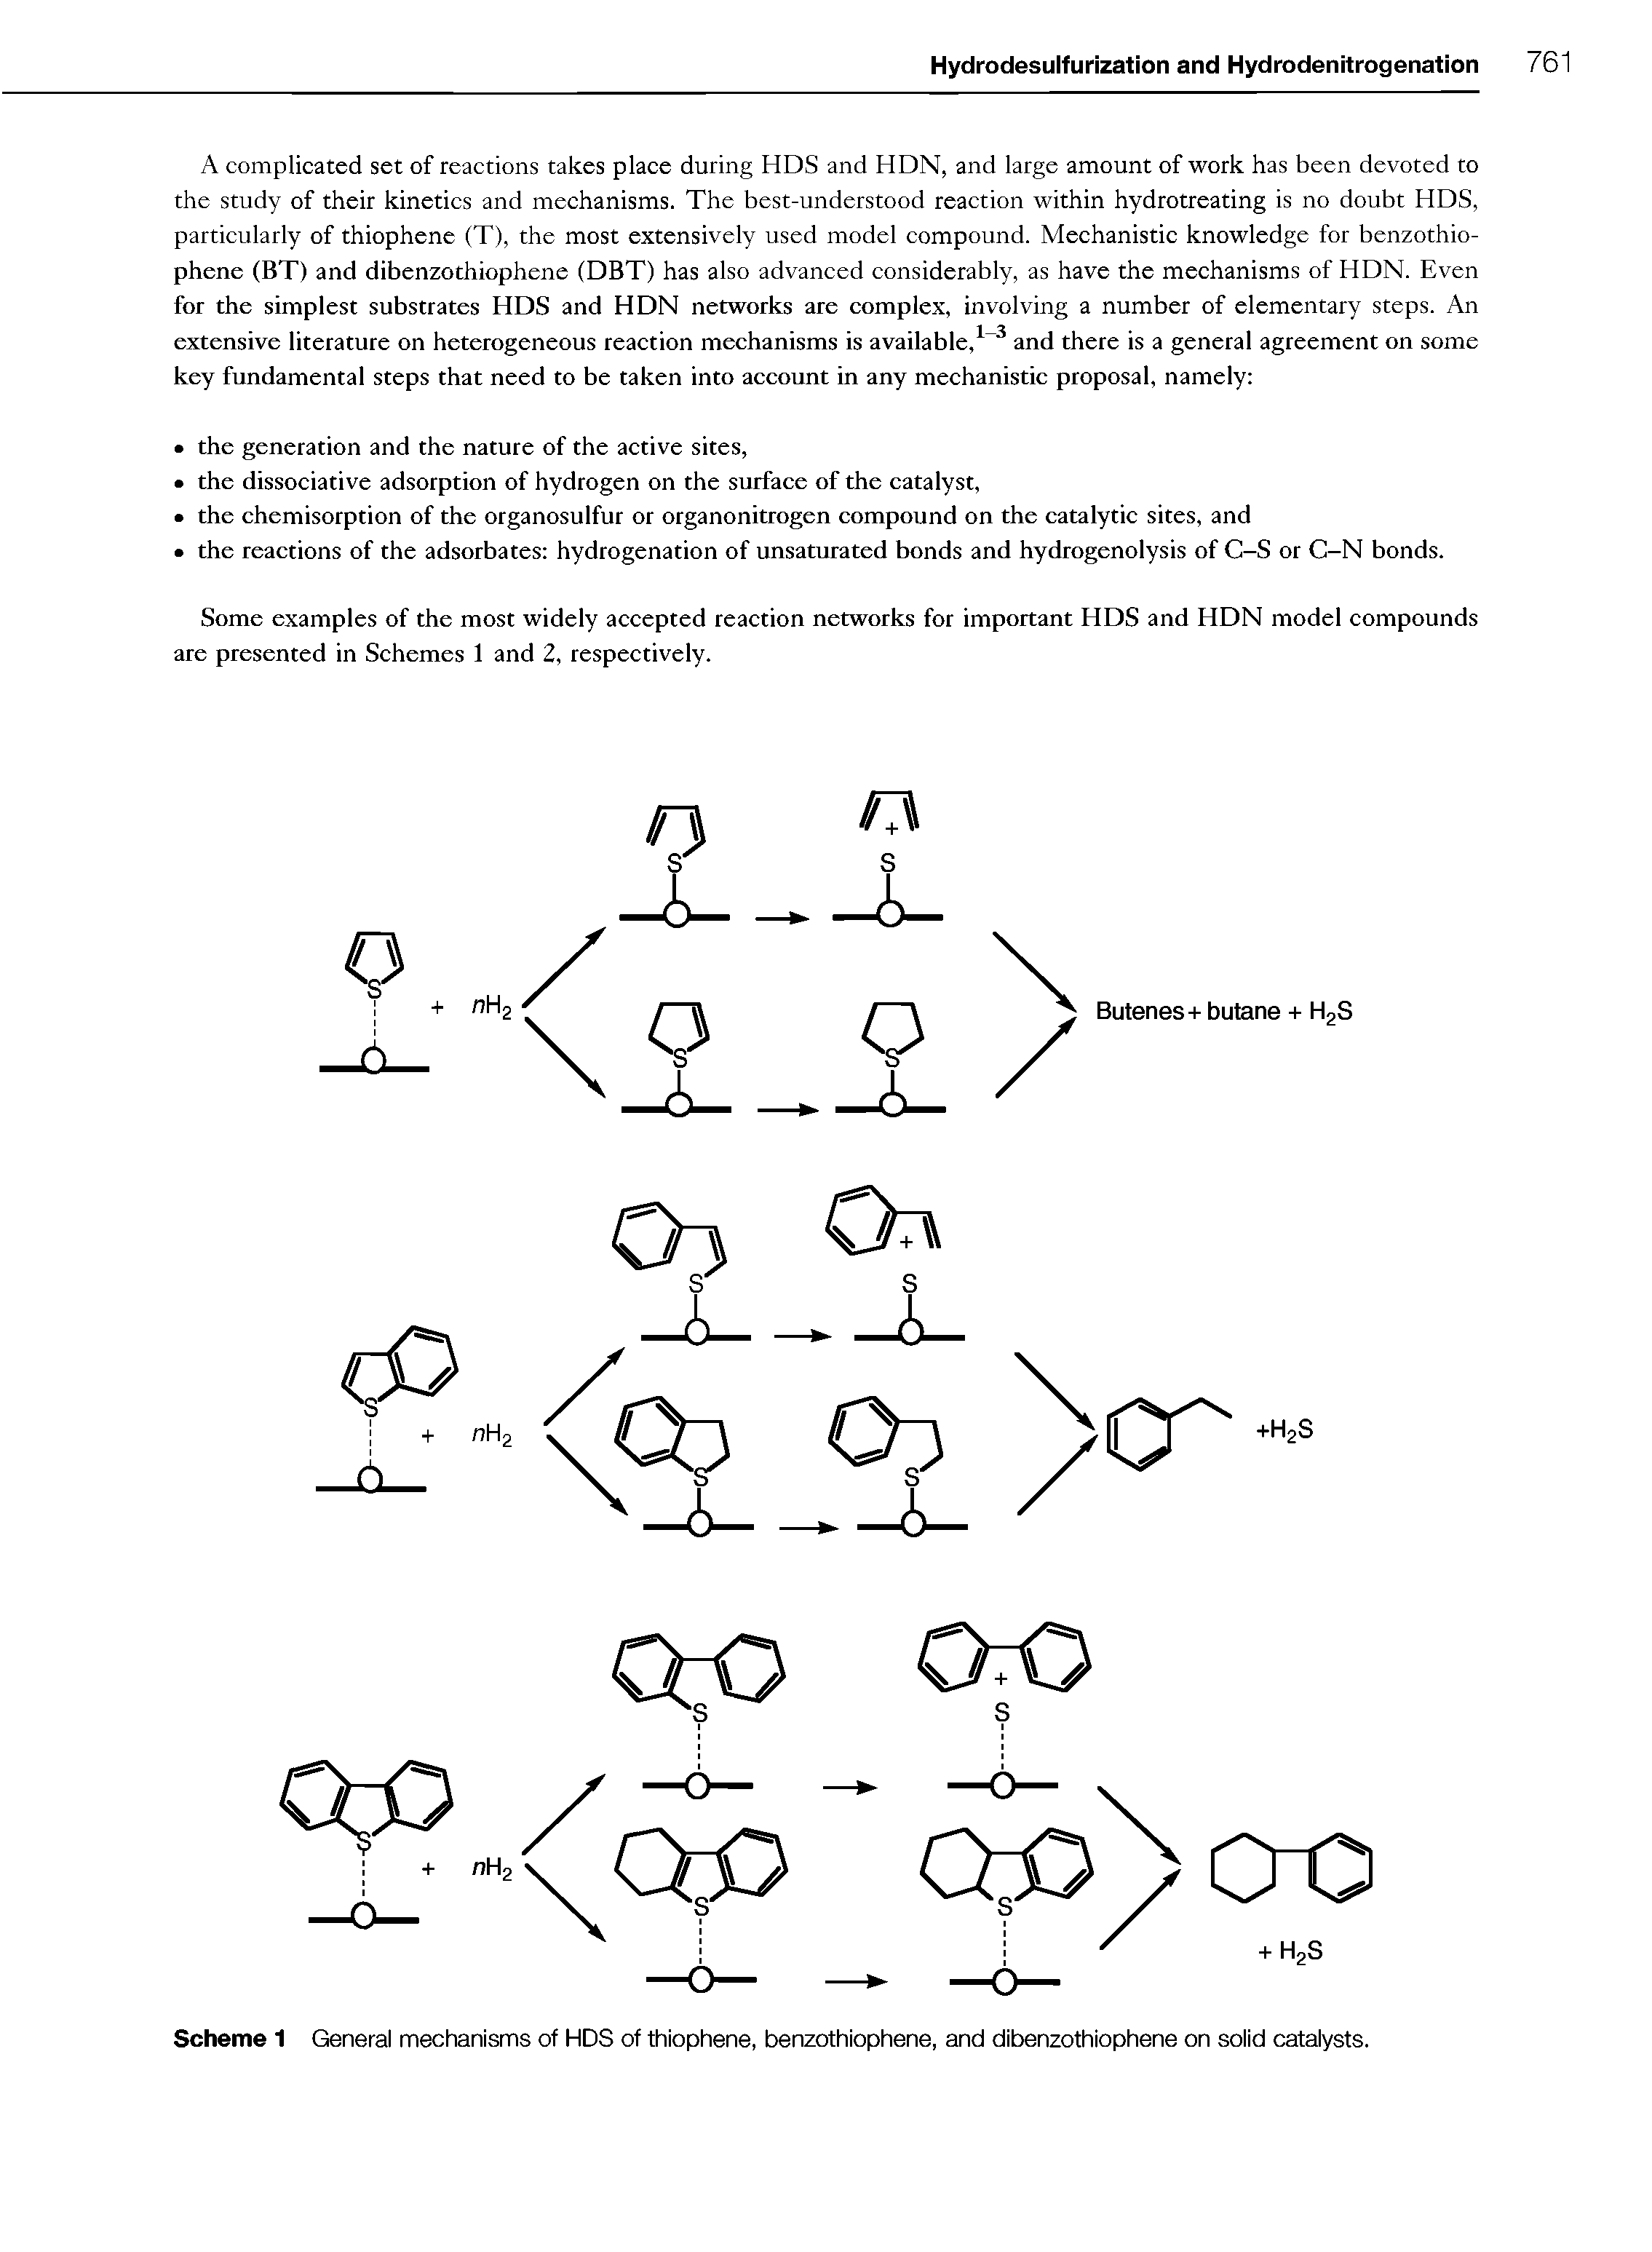 Scheme 1 General mechanisms of HDS of thiophene, benzothiophene, and dibenzothiophene on solid catalysts.